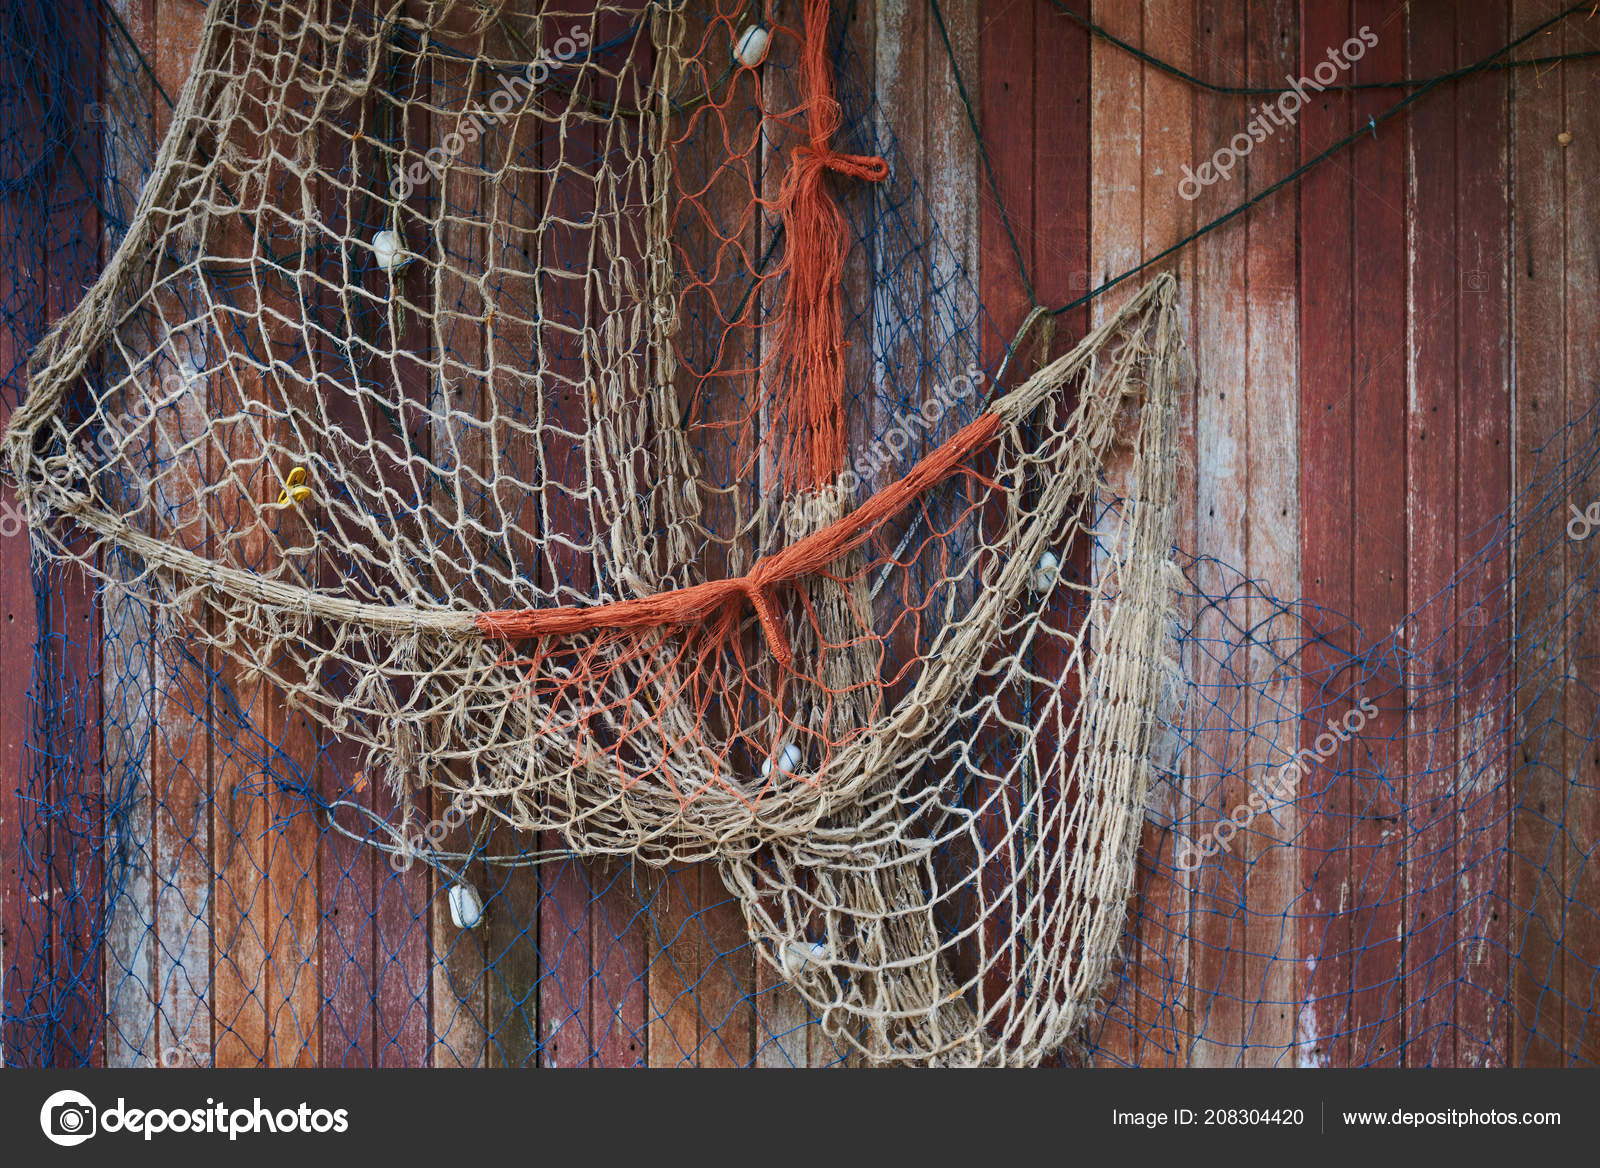 https://st4.depositphotos.com/5604060/20830/i/1600/depositphotos_208304420-stock-photo-fishing-net-vintage-style-old.jpg